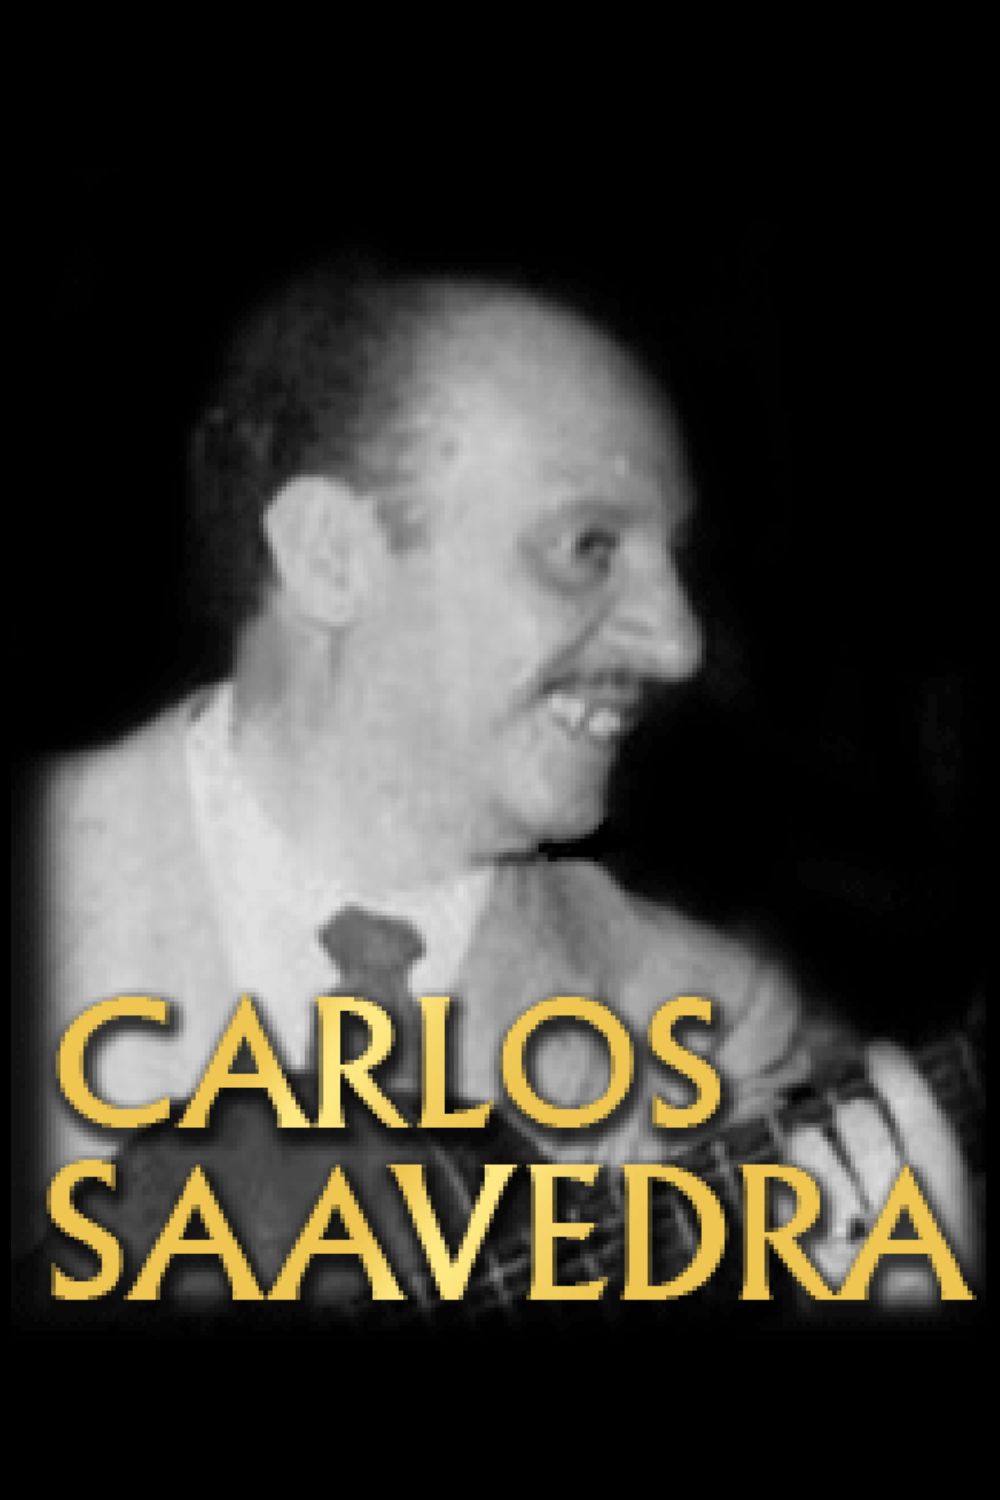 Carlos Saavedra, Argentine Tango singer.